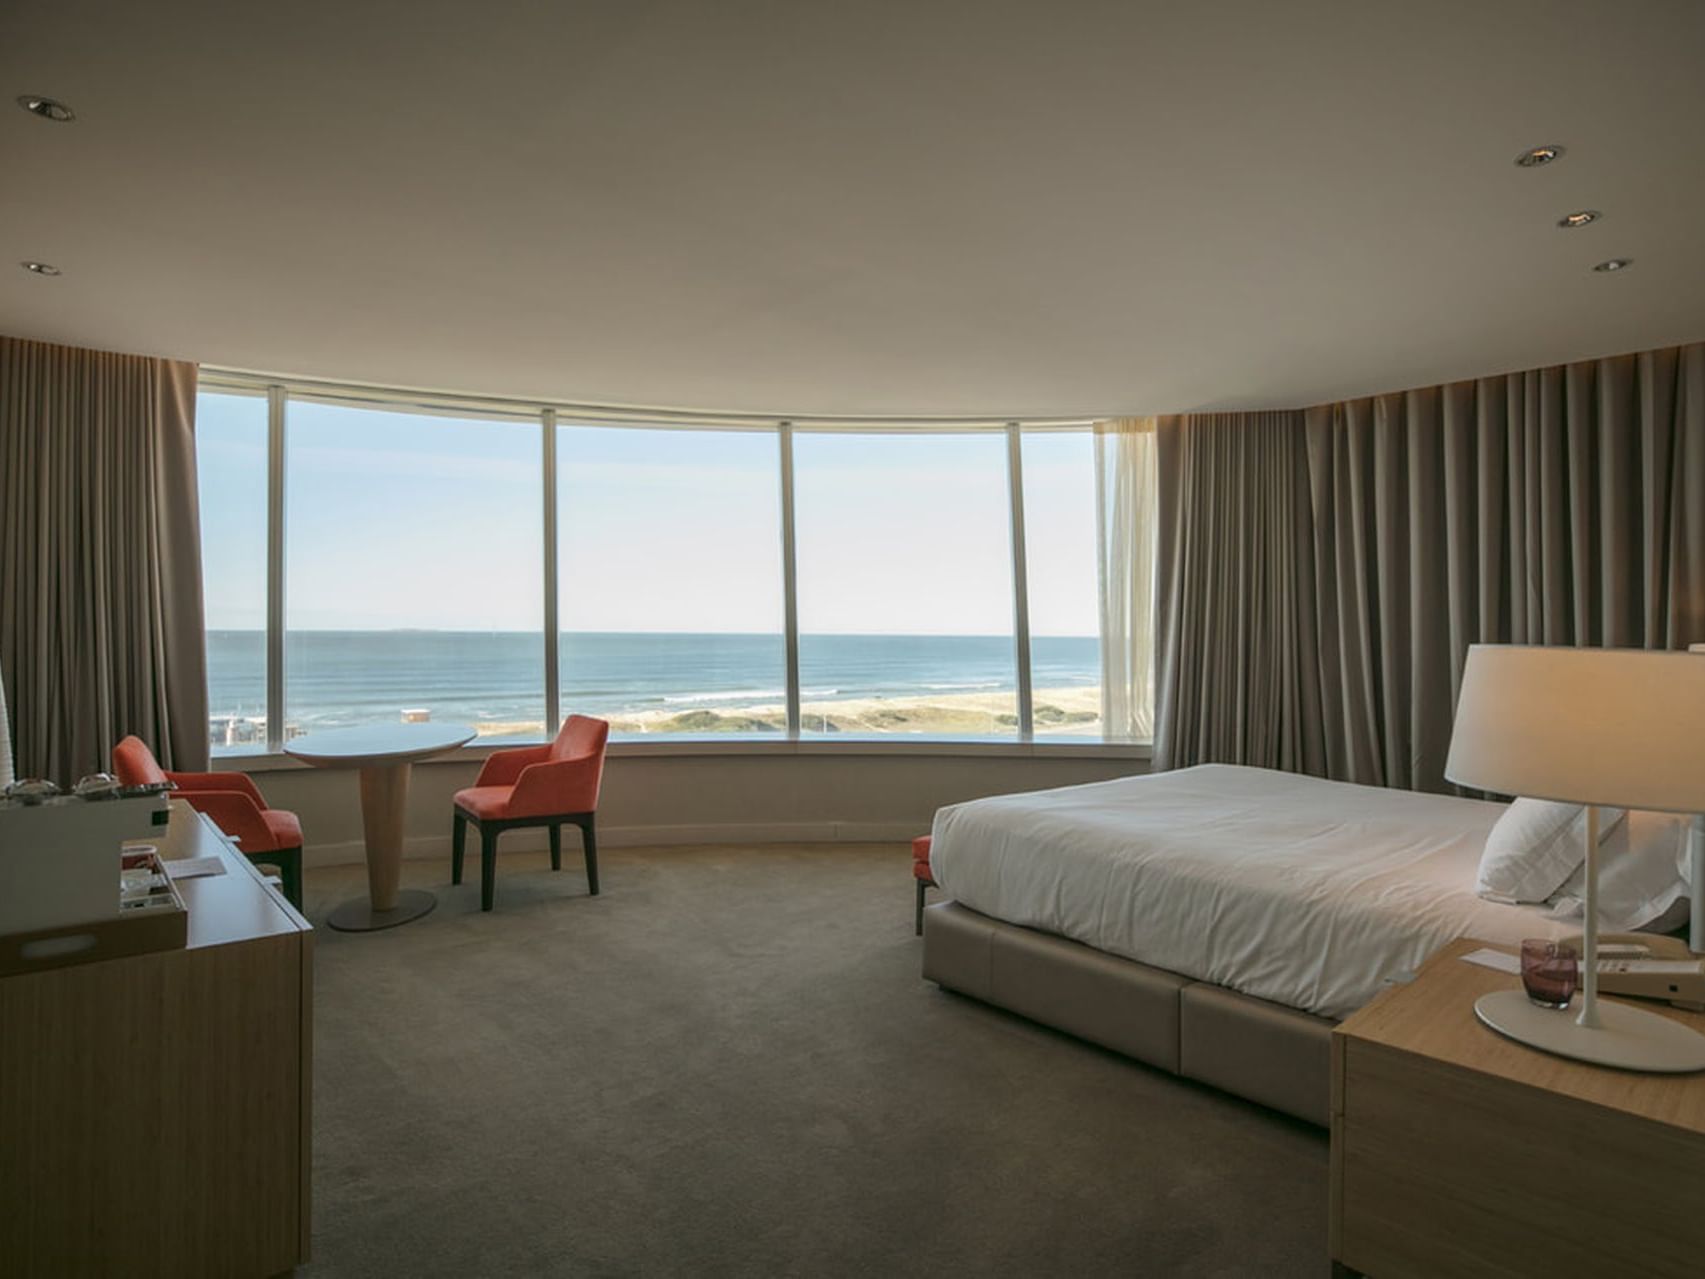 Lounge area in Ocean Front Room at Grand Hotel Punta del Este